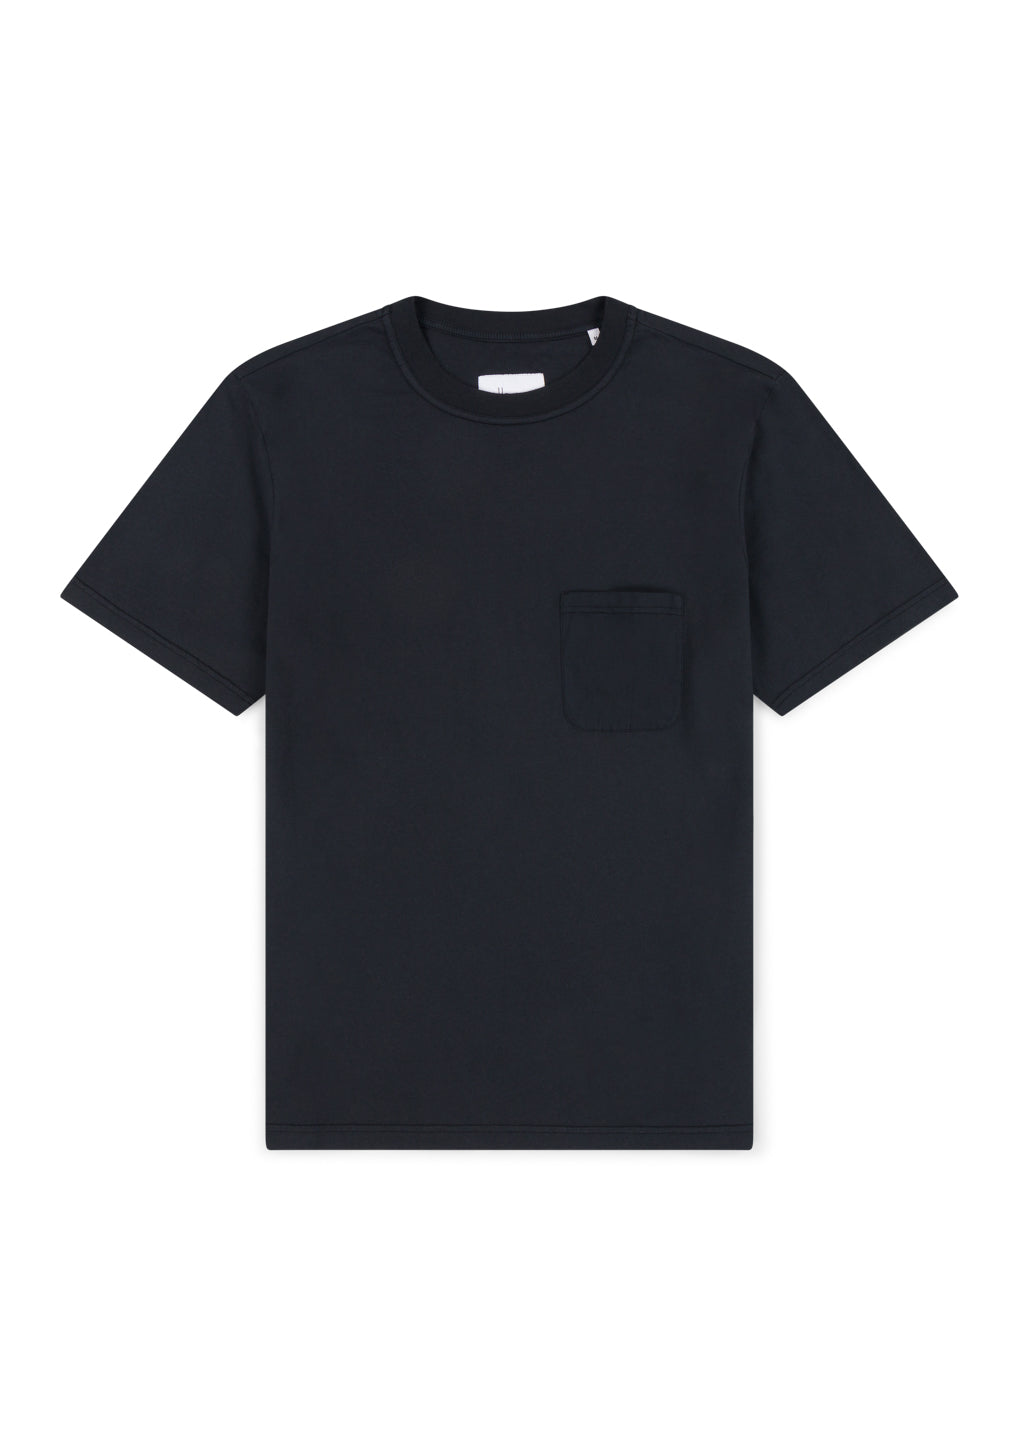 Woven Pocket T-Shirt in Black – albam Clothing